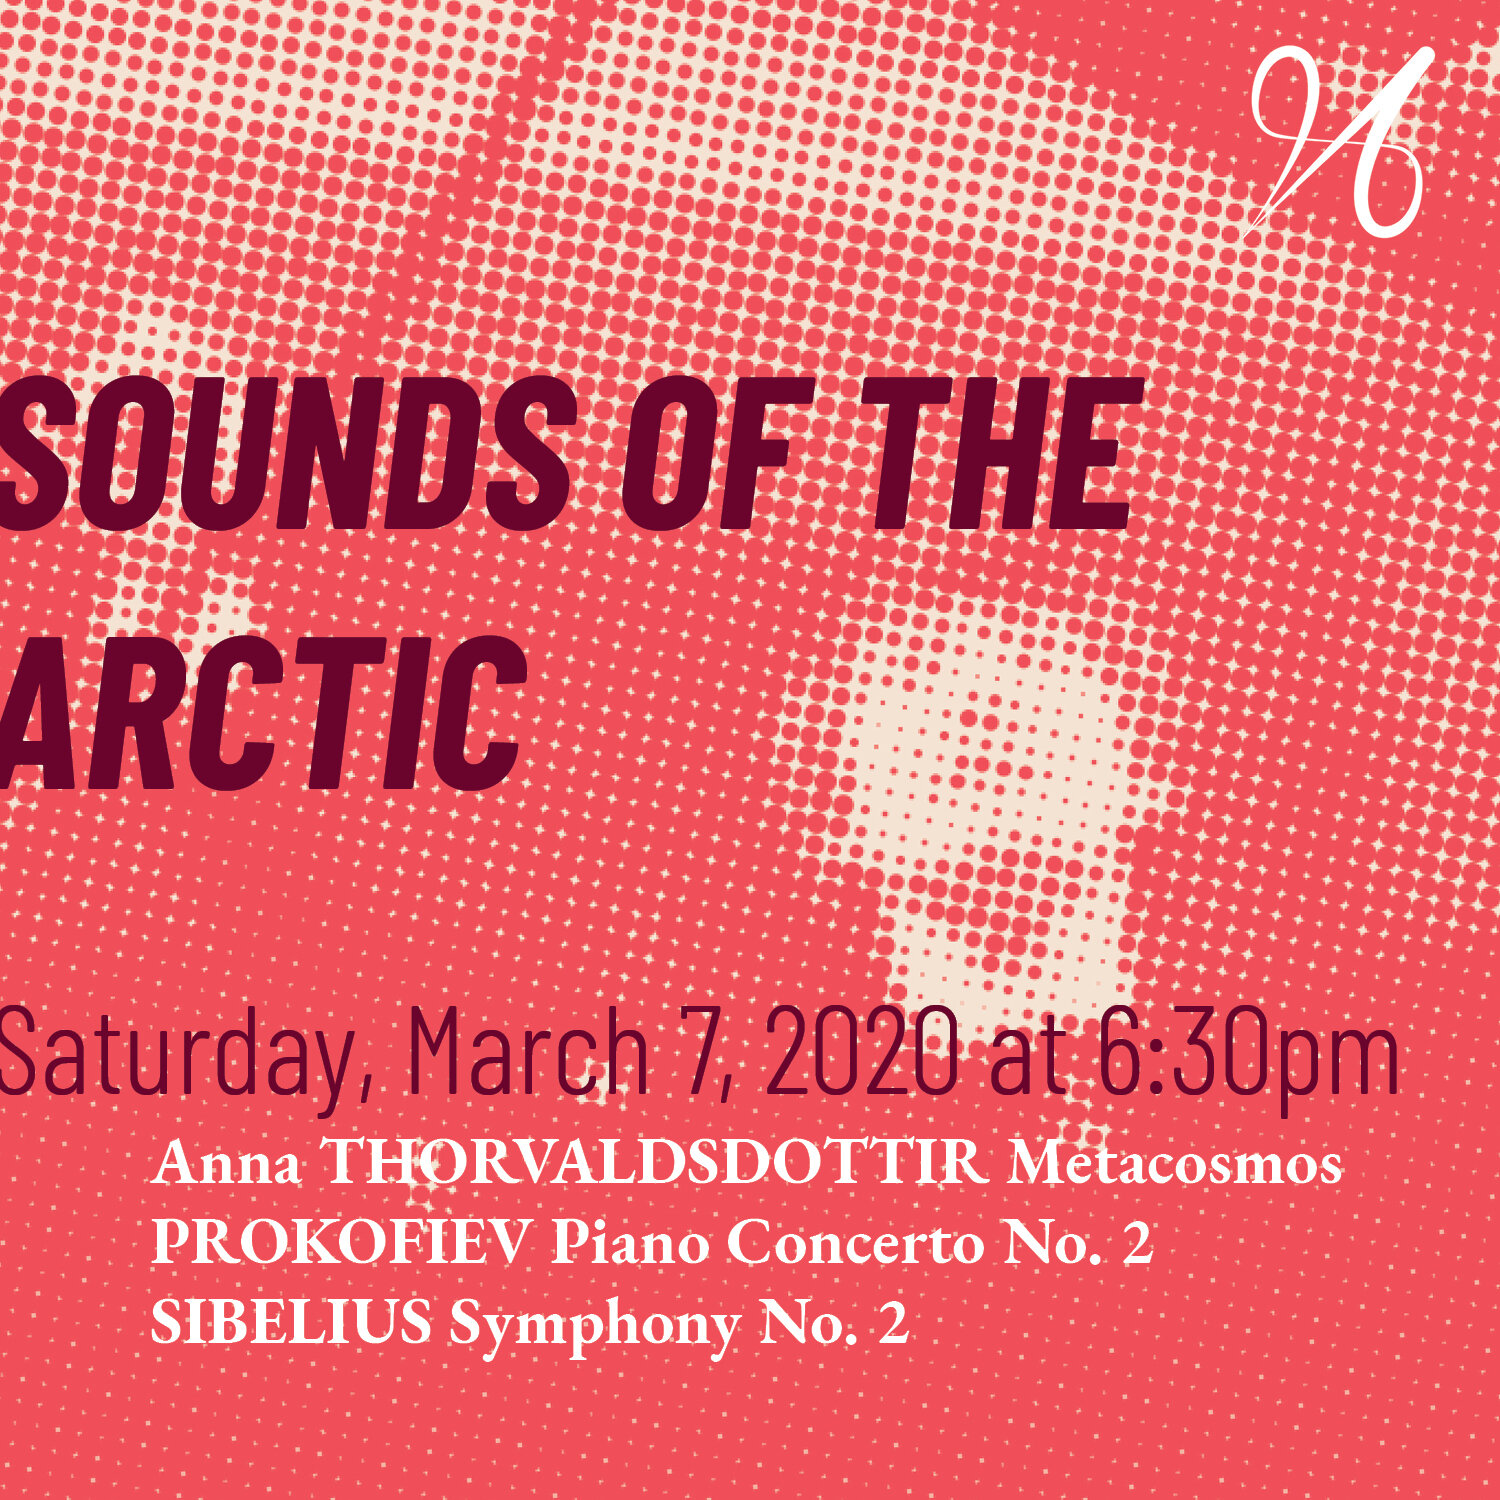 2020-03-07 Sounds of the Arctic - INSTAGRAM.jpg